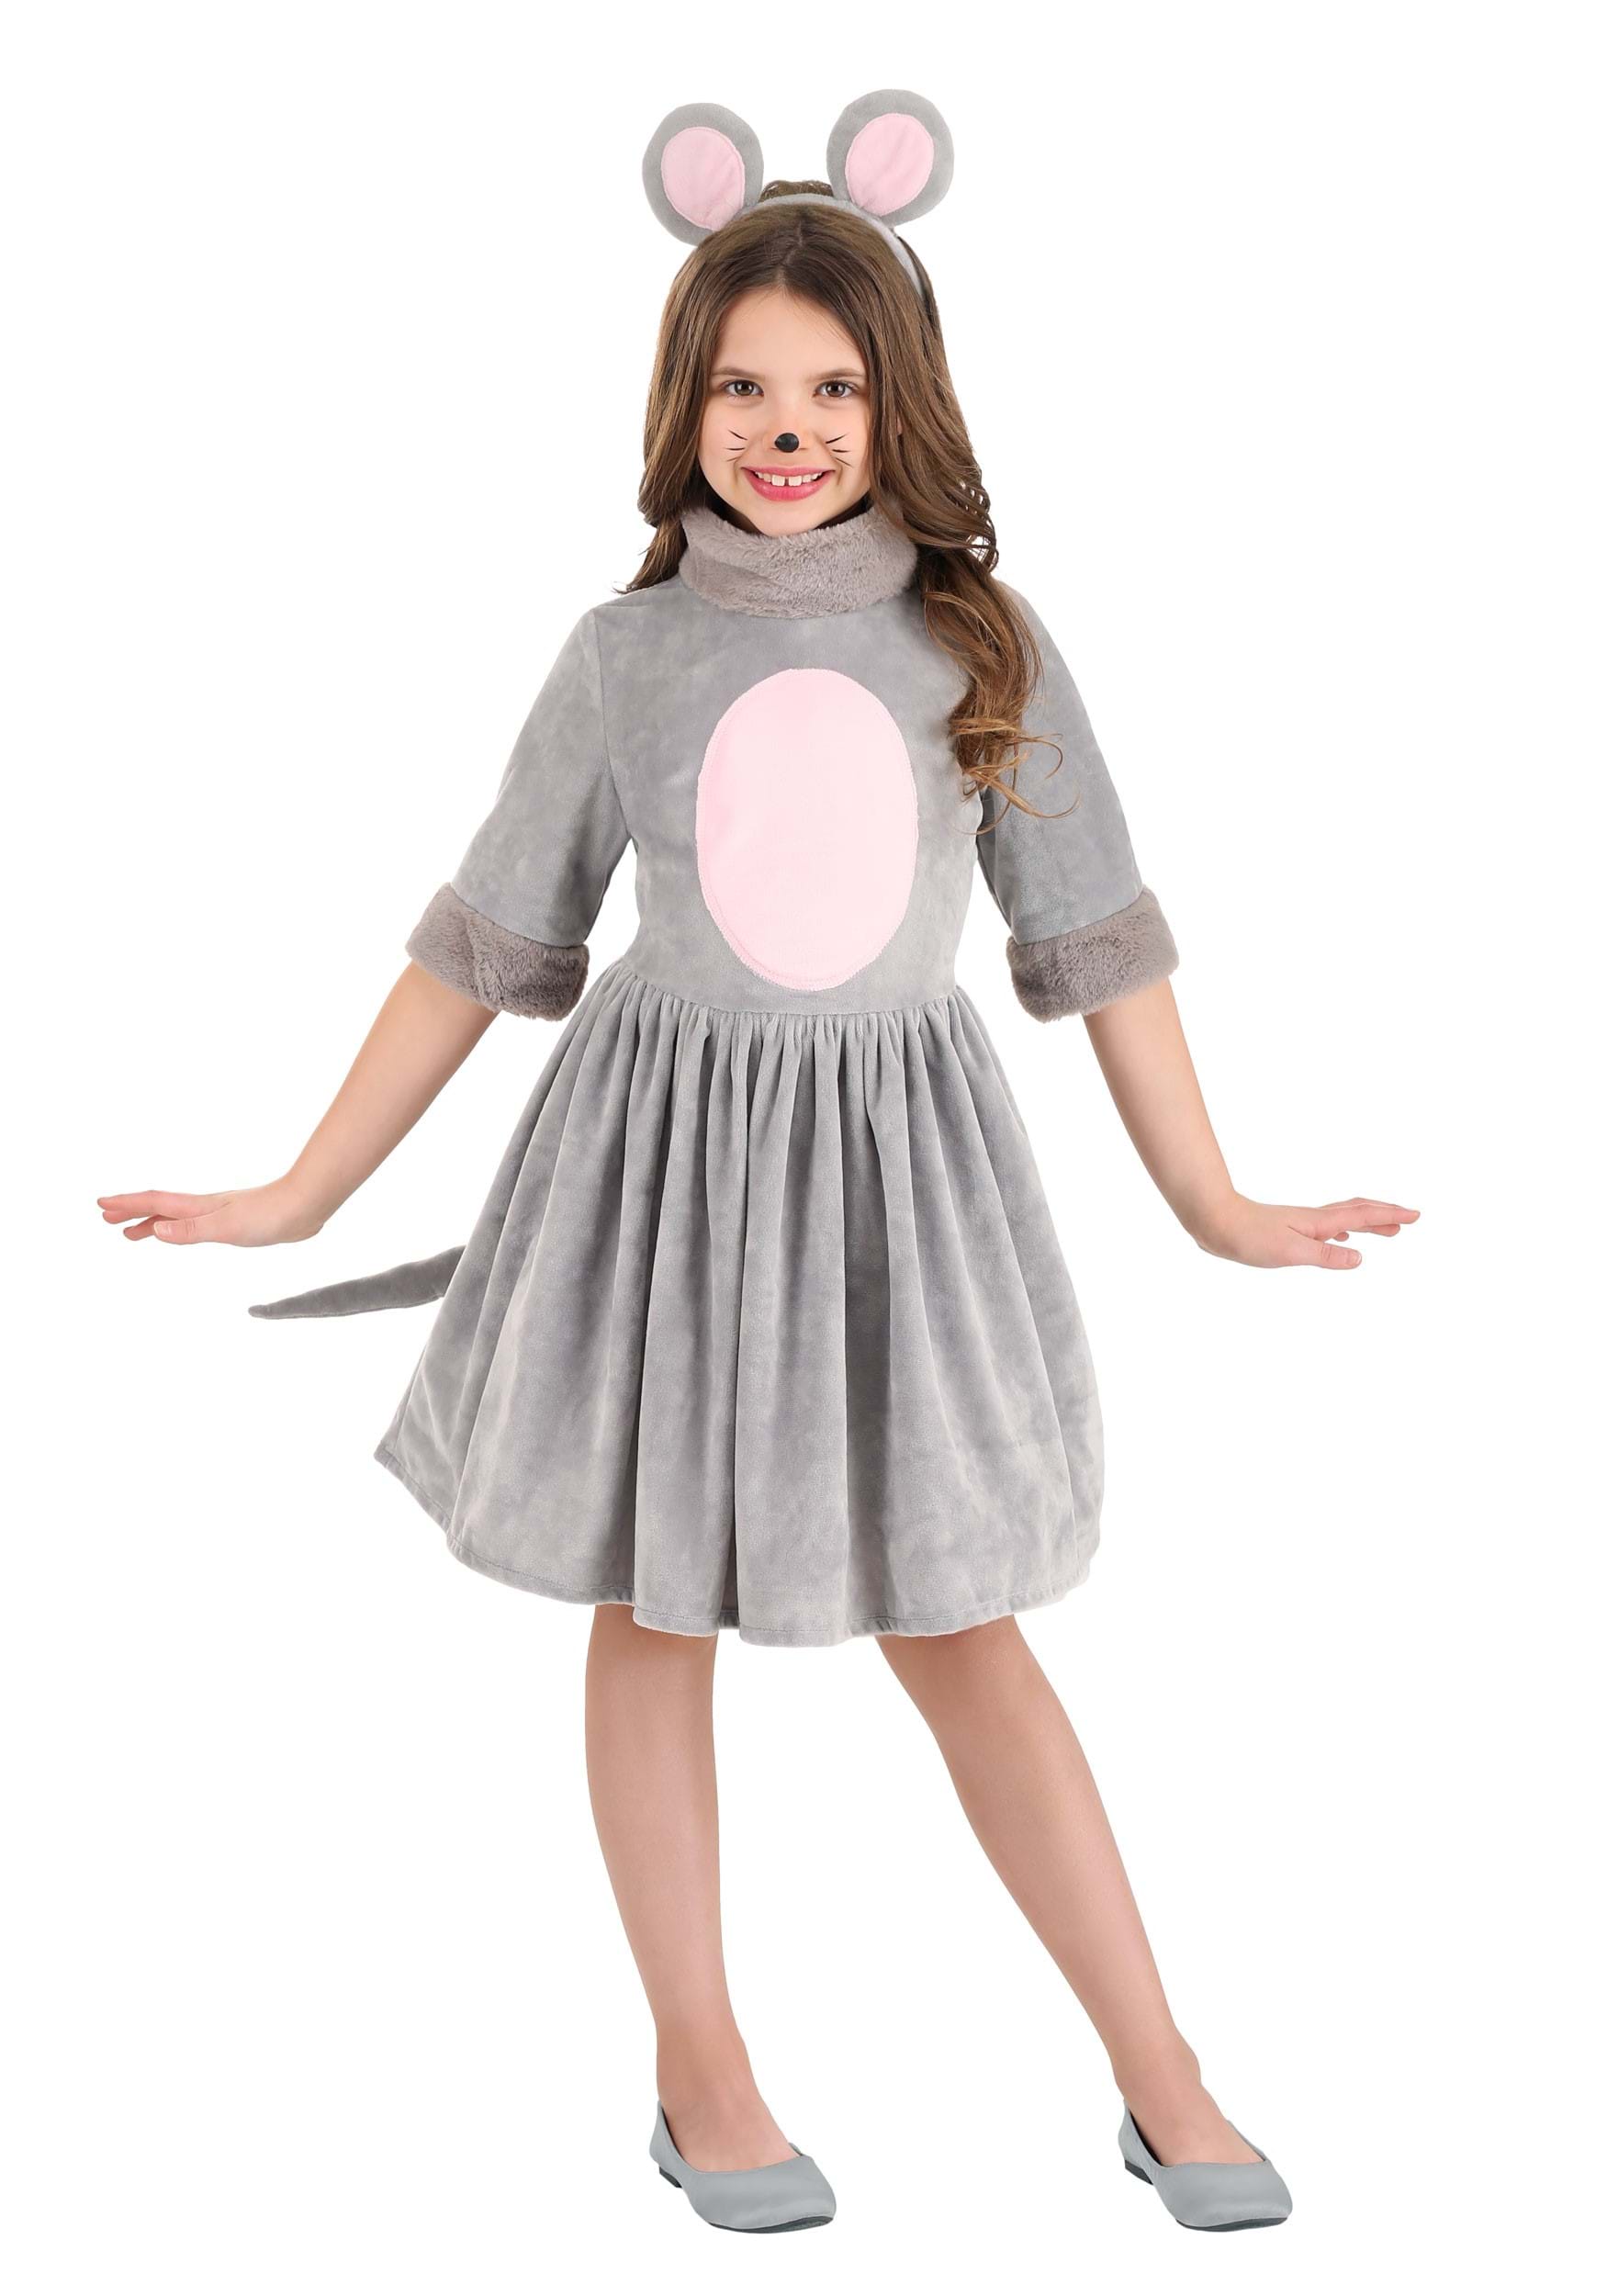 Photos - Fancy Dress Winsun Dress FUN Costumes Mouse Dress Girl's Costume Pink/Gray FUN1750CH 